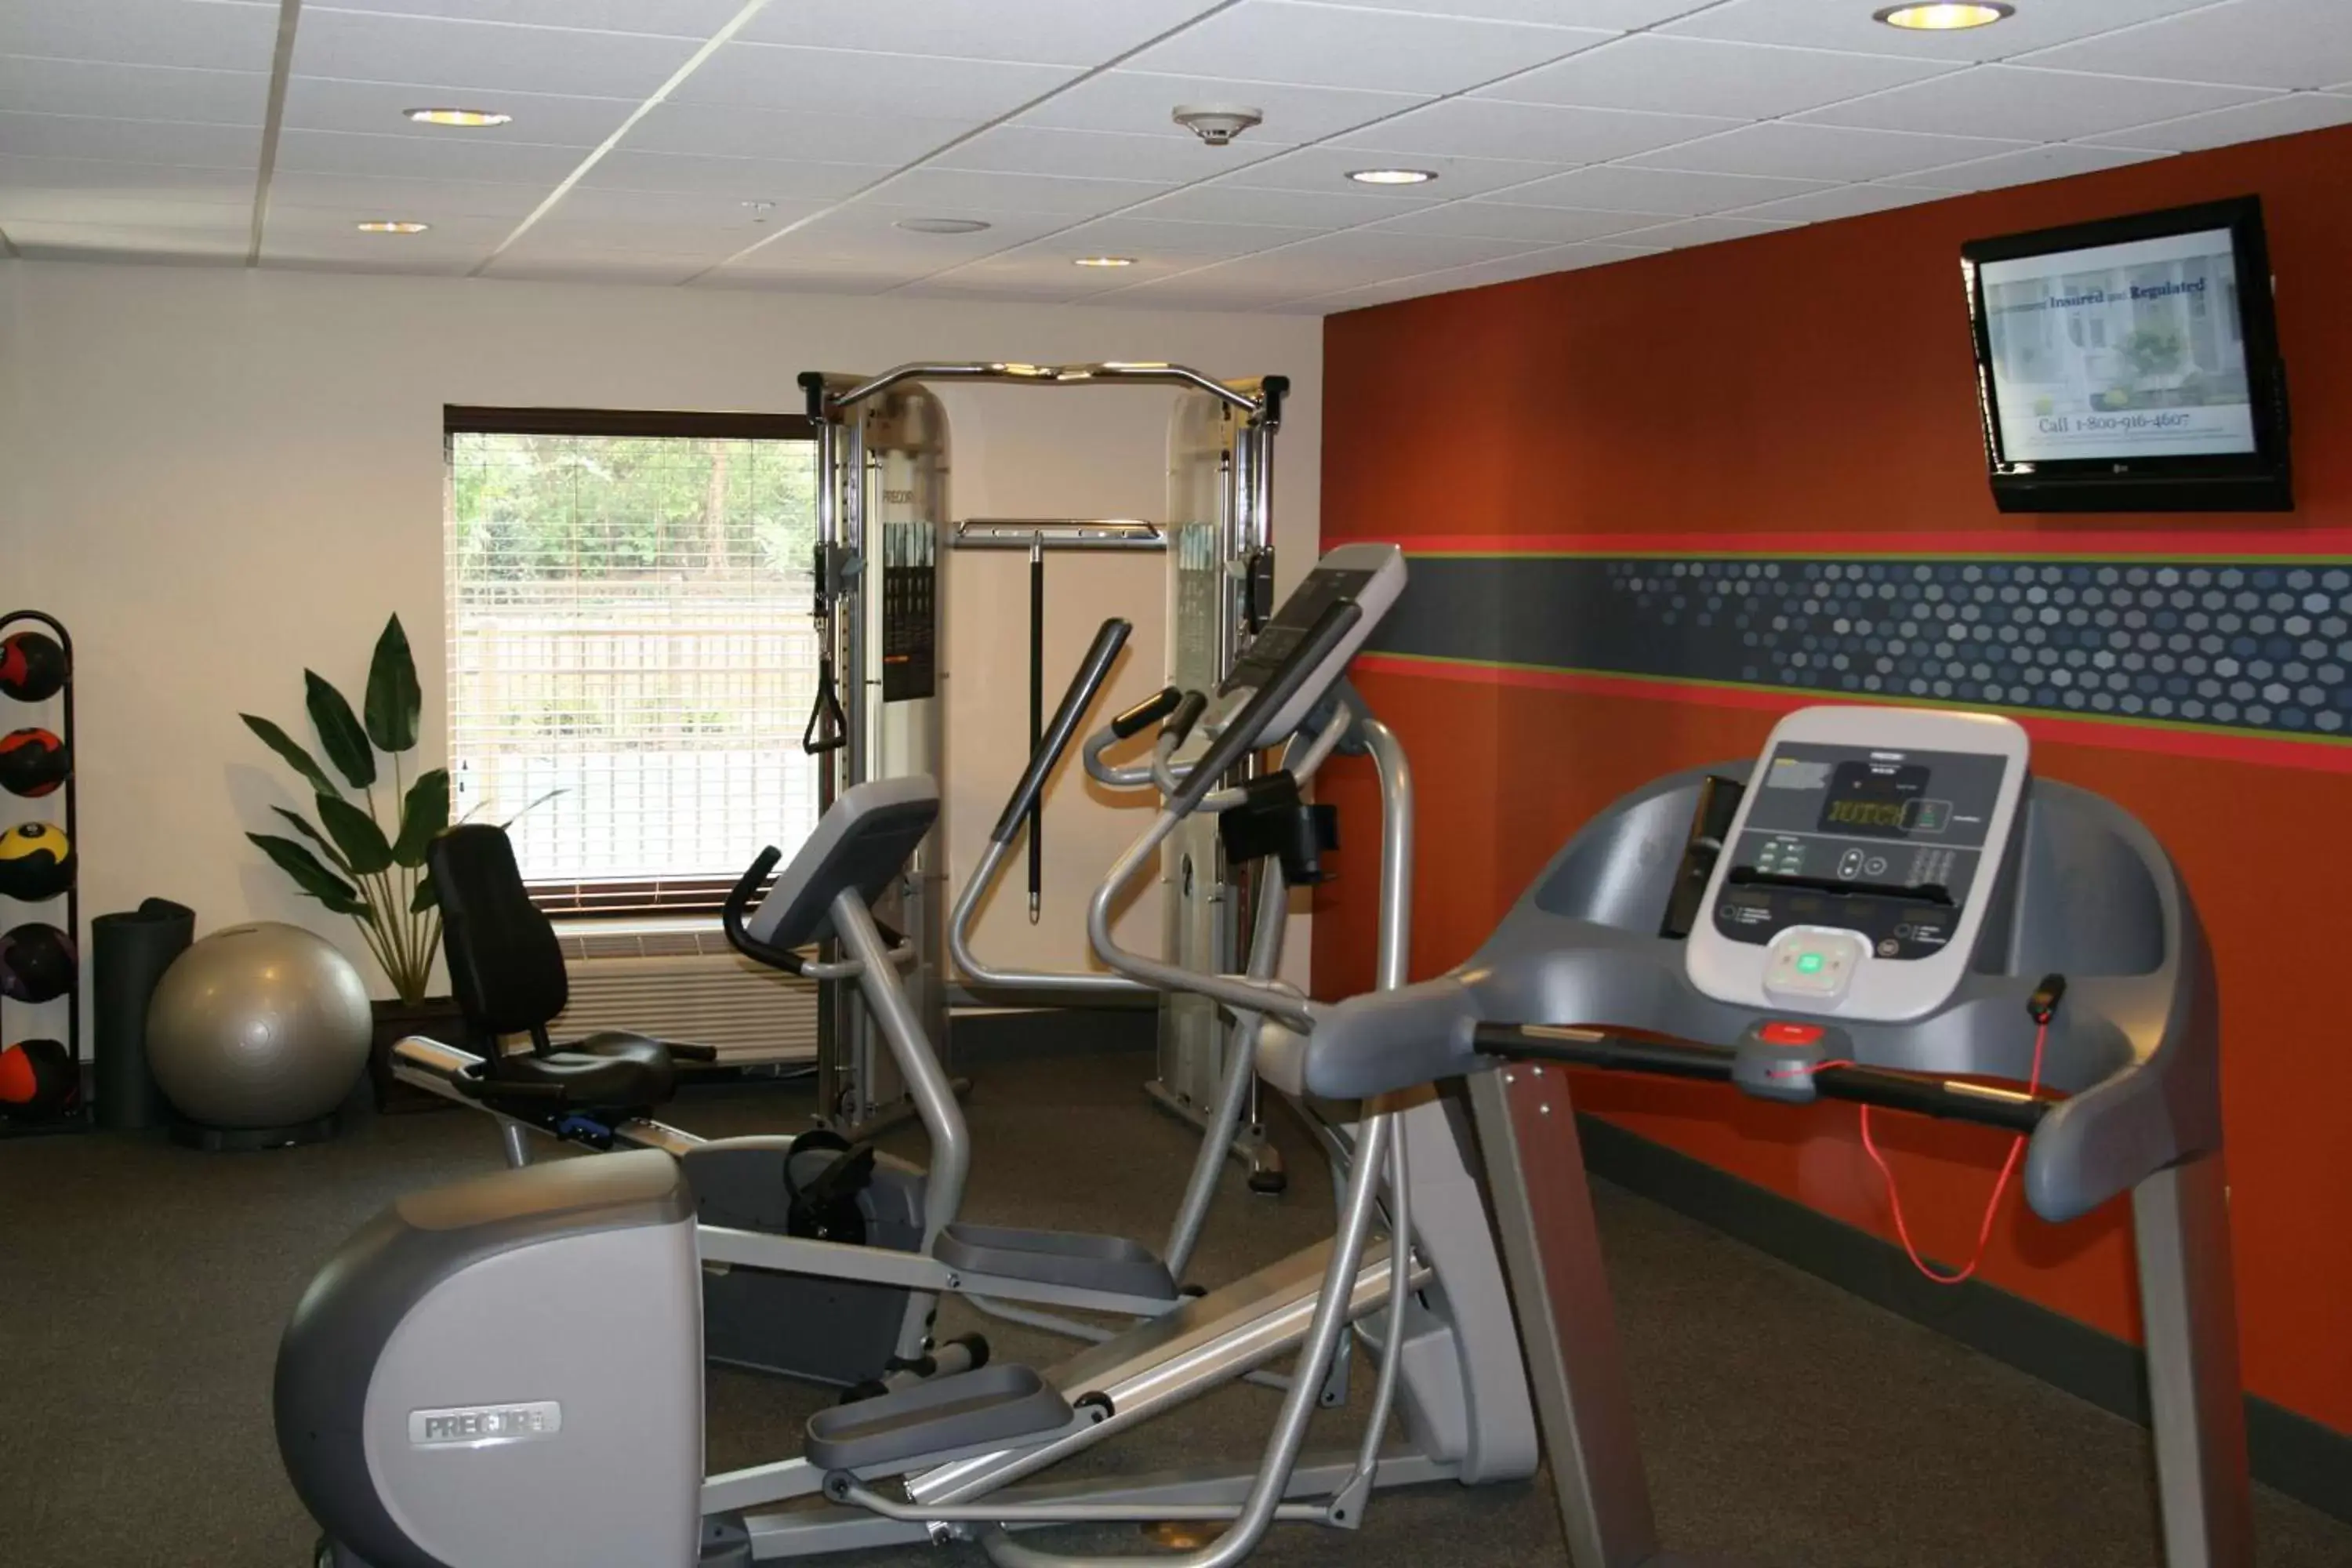 Fitness centre/facilities, Fitness Center/Facilities in Hampton Inn & Suites Lebanon